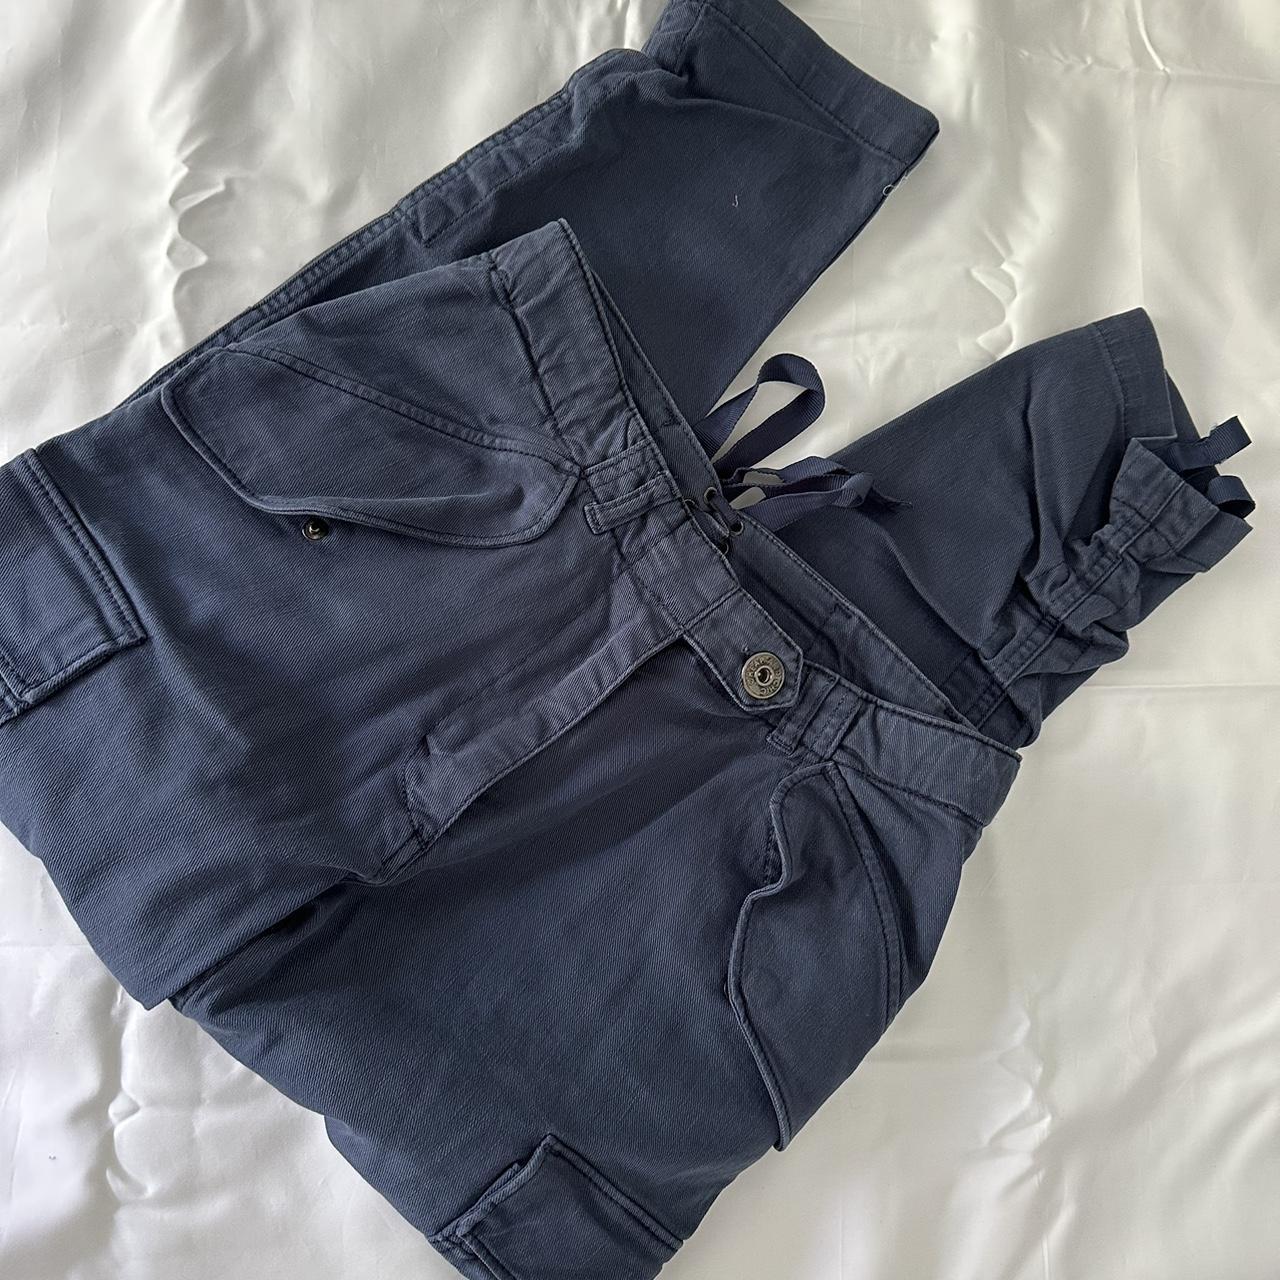 Moschino Cheap & Chic Women's Navy Trousers (4)